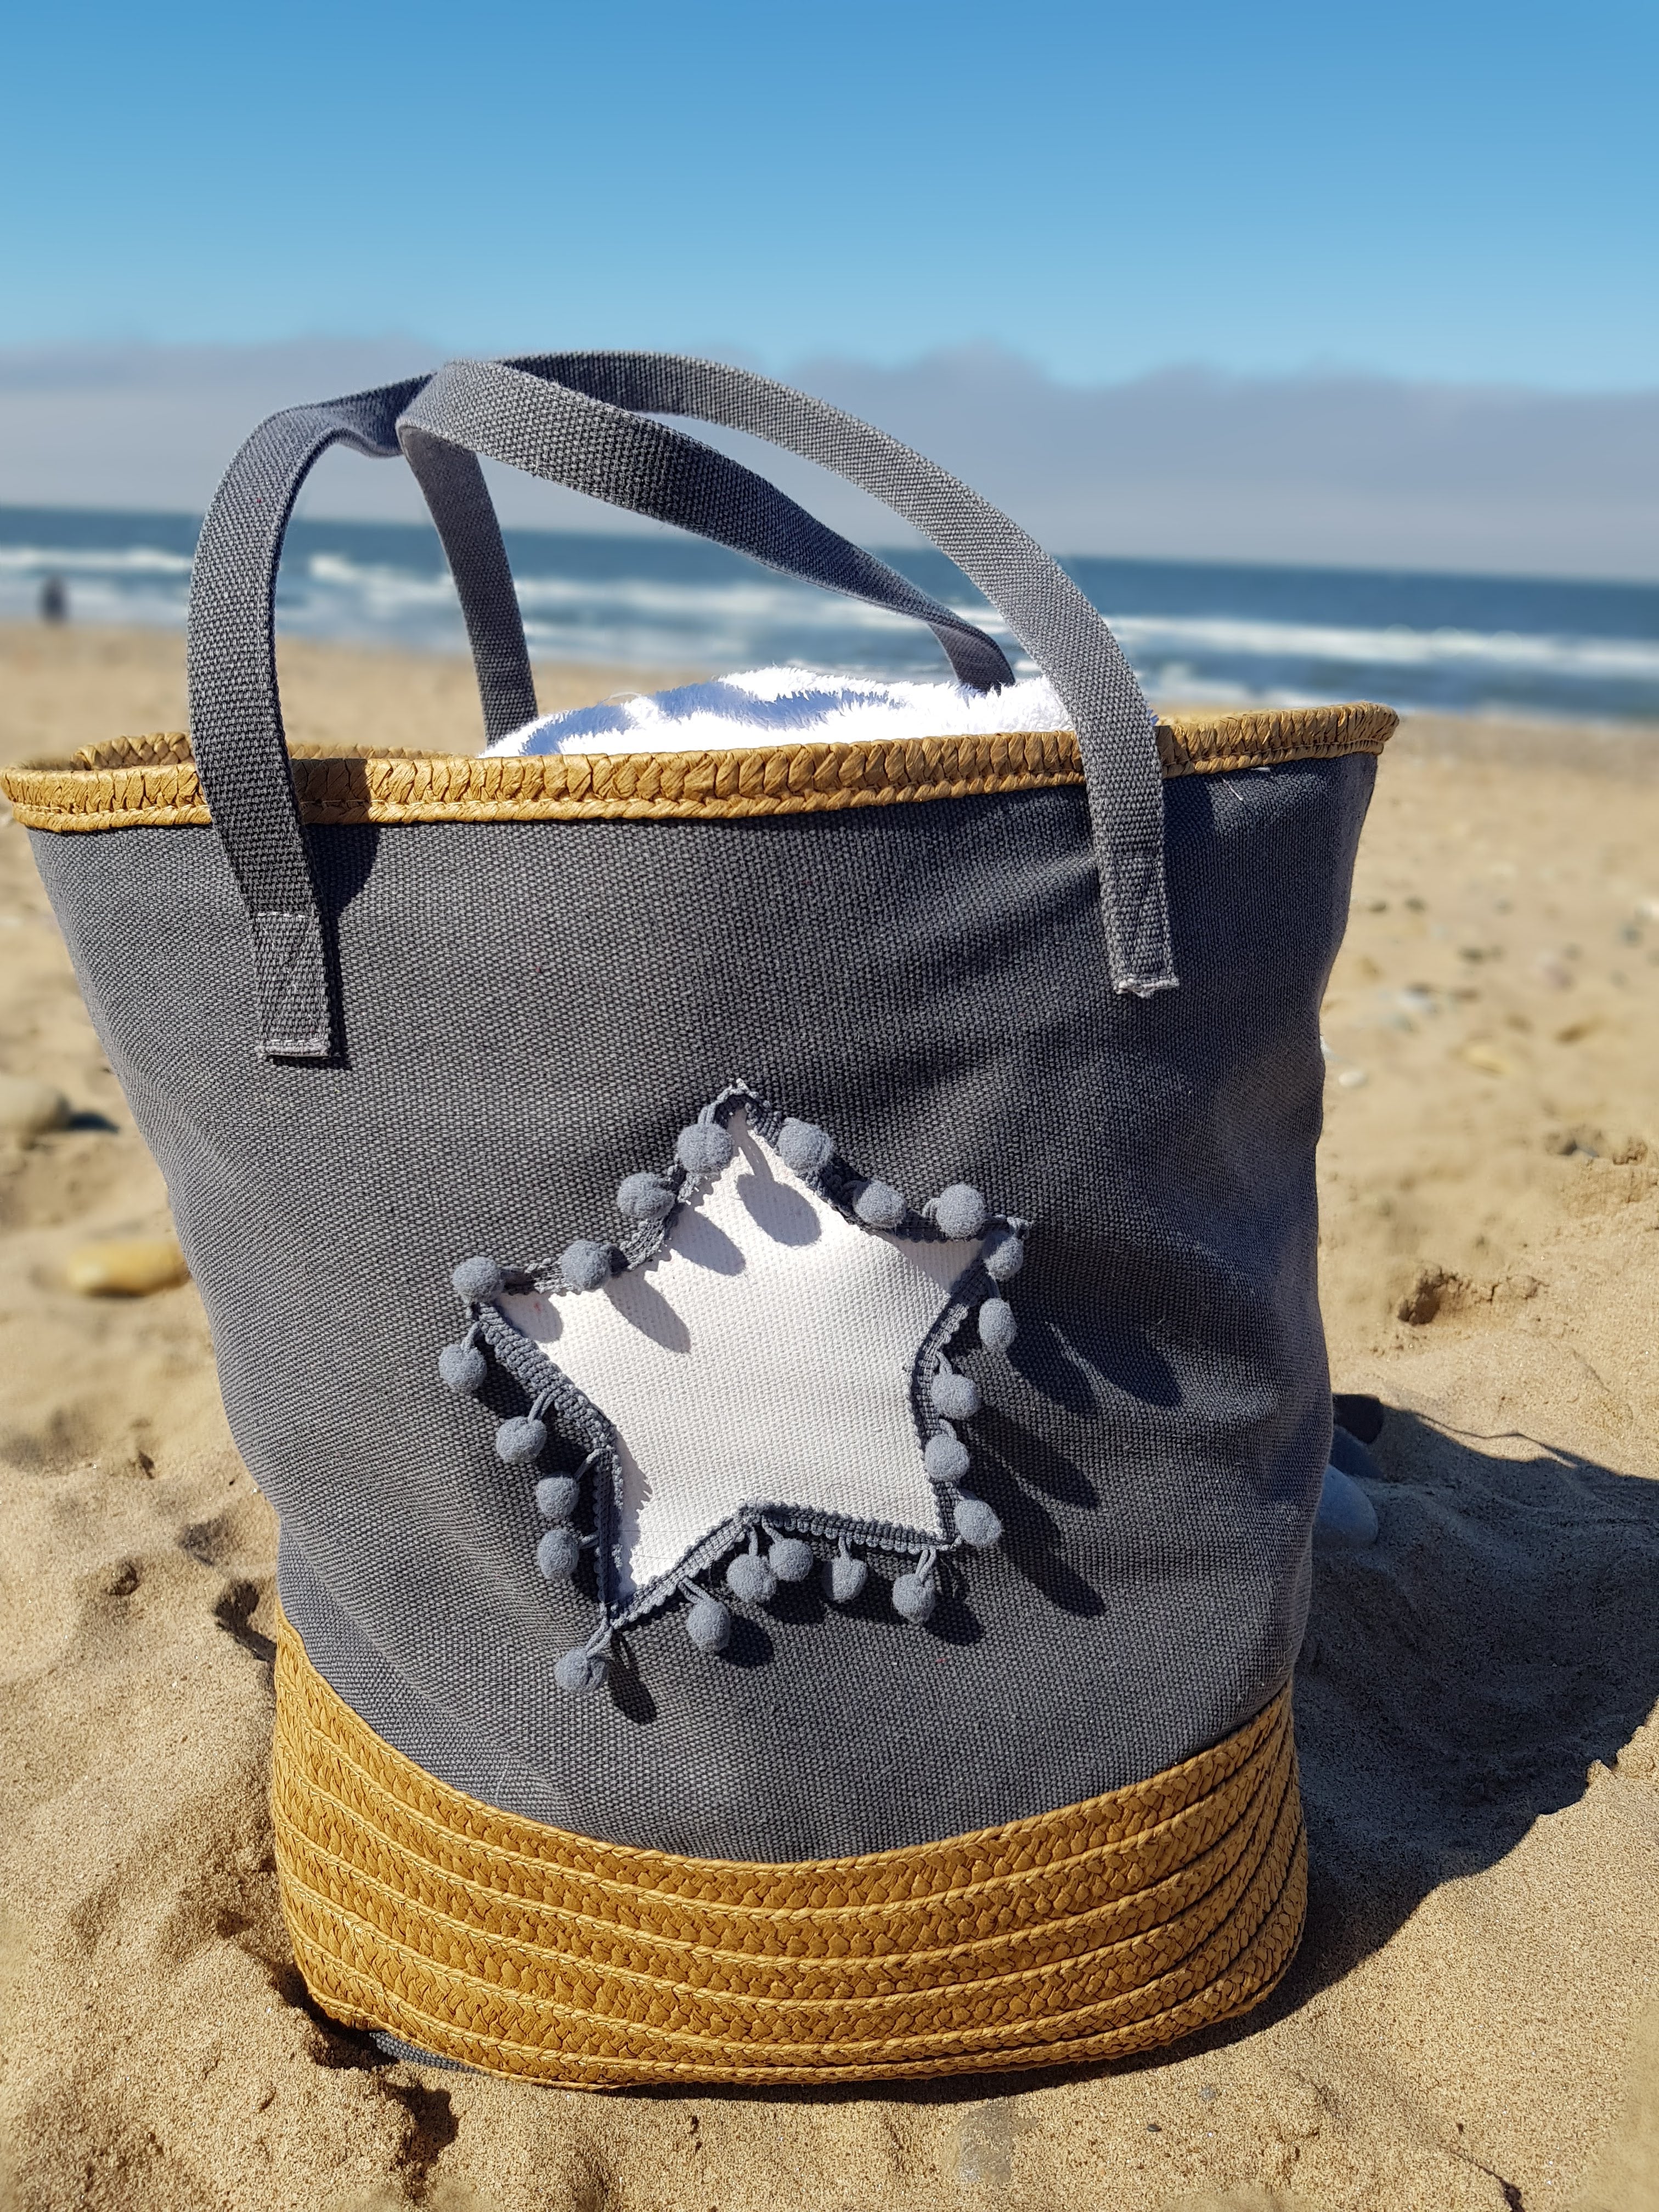 large beach bag organiser bag with a star pompom design oatmeal